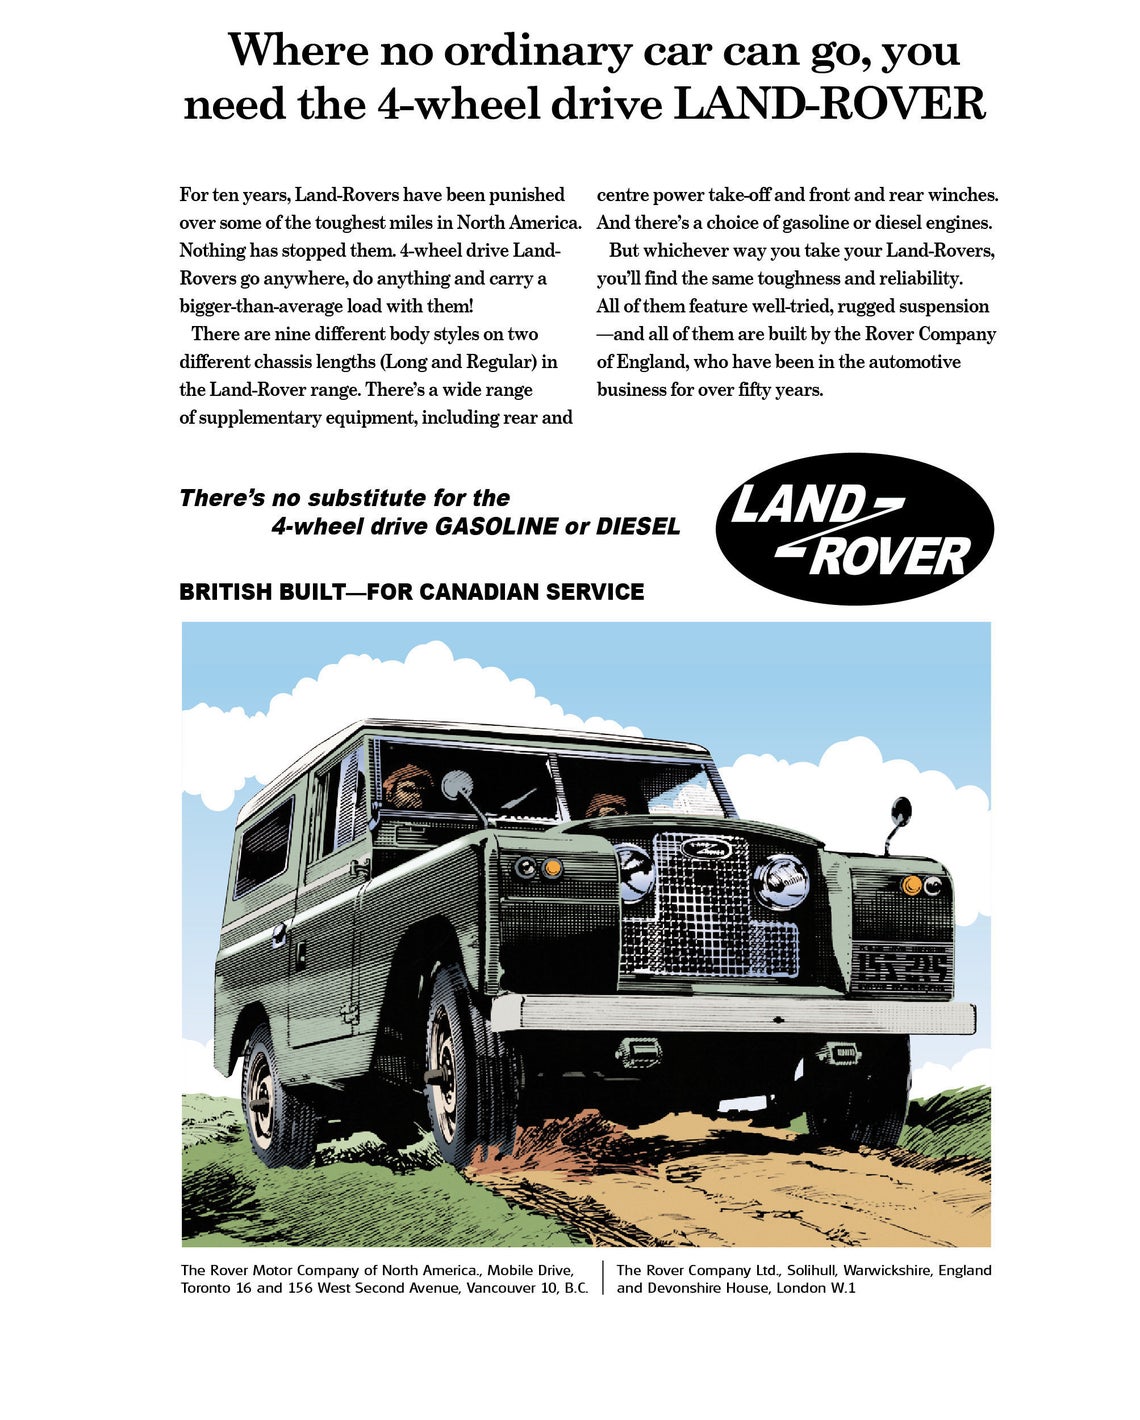 1960's Land Rover Canadian Overseas 4 x 4 Motoring Advert